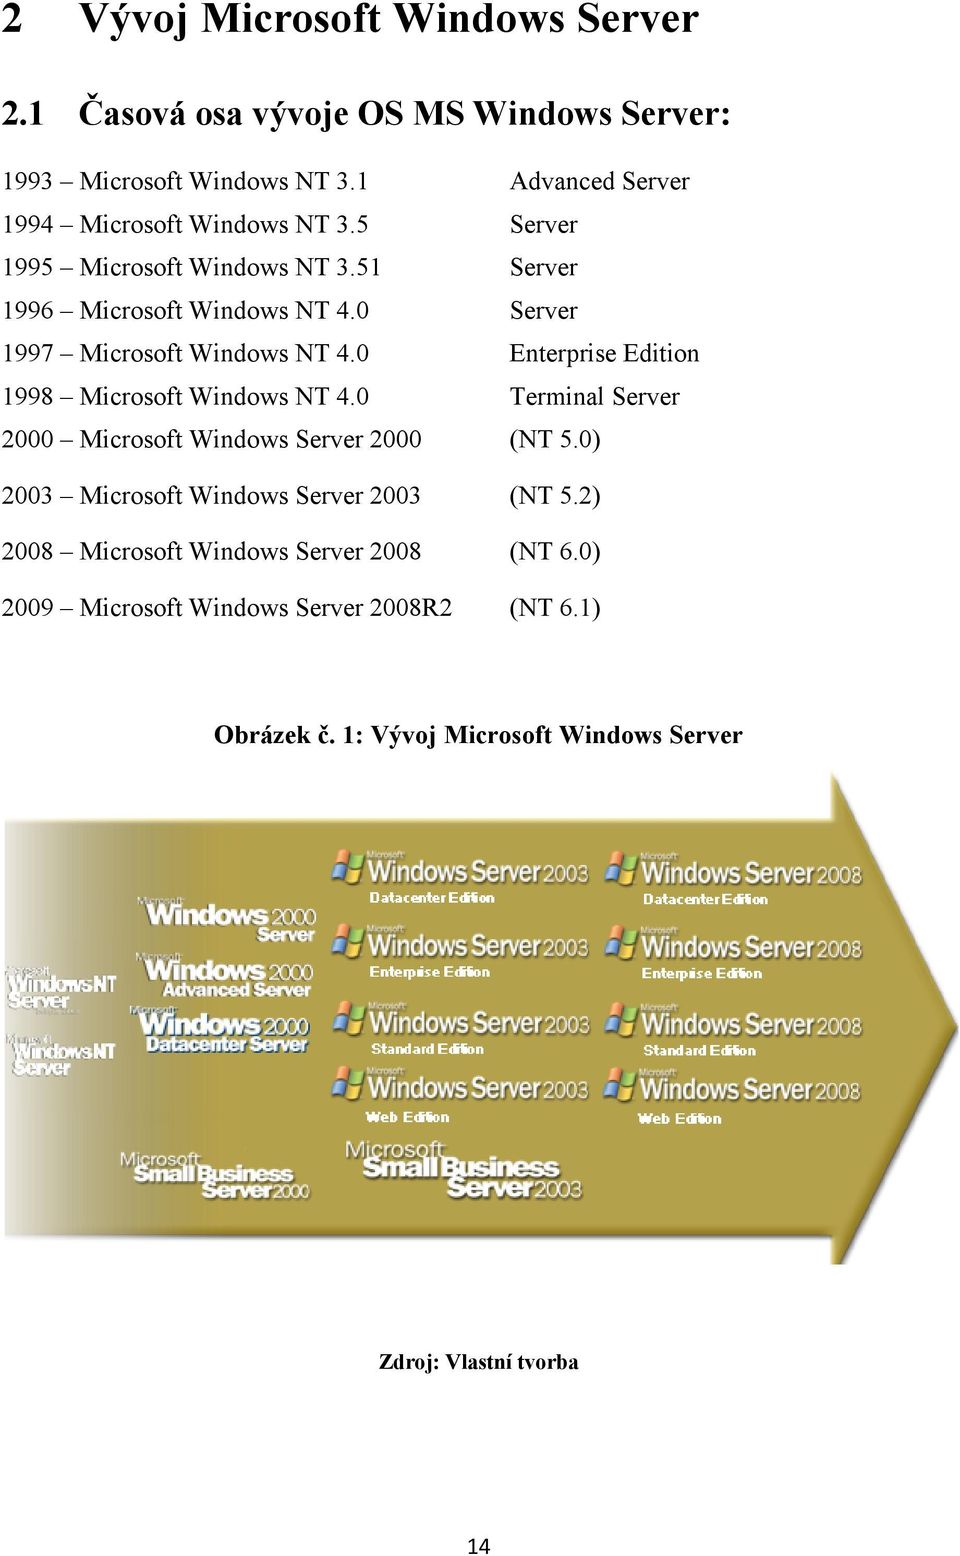 0 Server 1997 Microsoft Windows NT 4.0 Enterprise Edition 1998 Microsoft Windows NT 4.0 Terminal Server 2000 Microsoft Windows Server 2000 (NT 5.